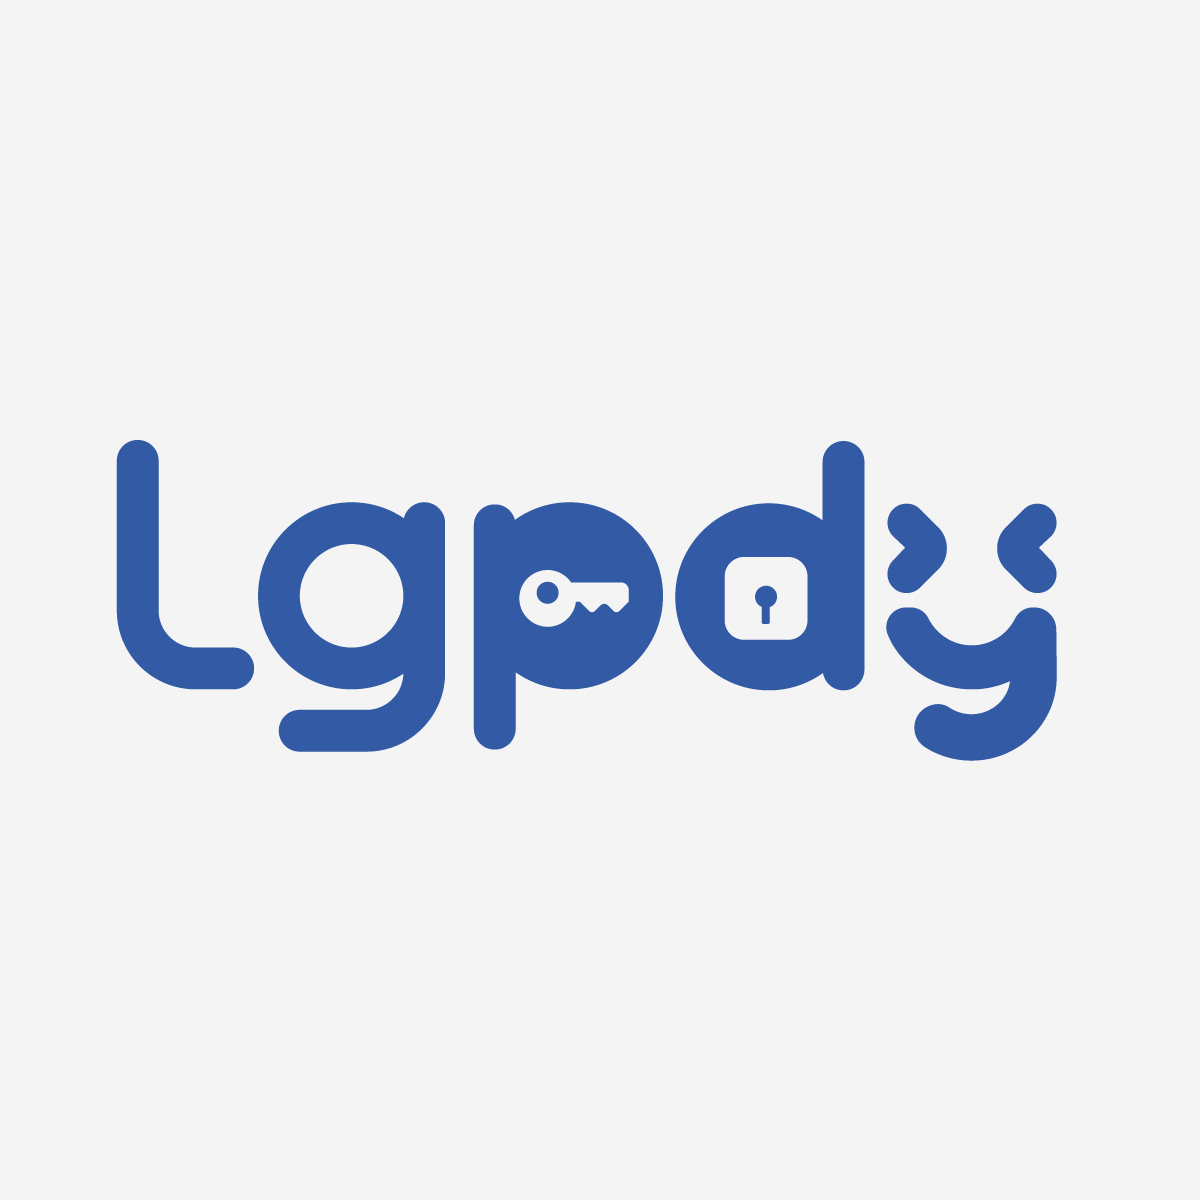 LGPDY ‑ Compatível com a LGPD